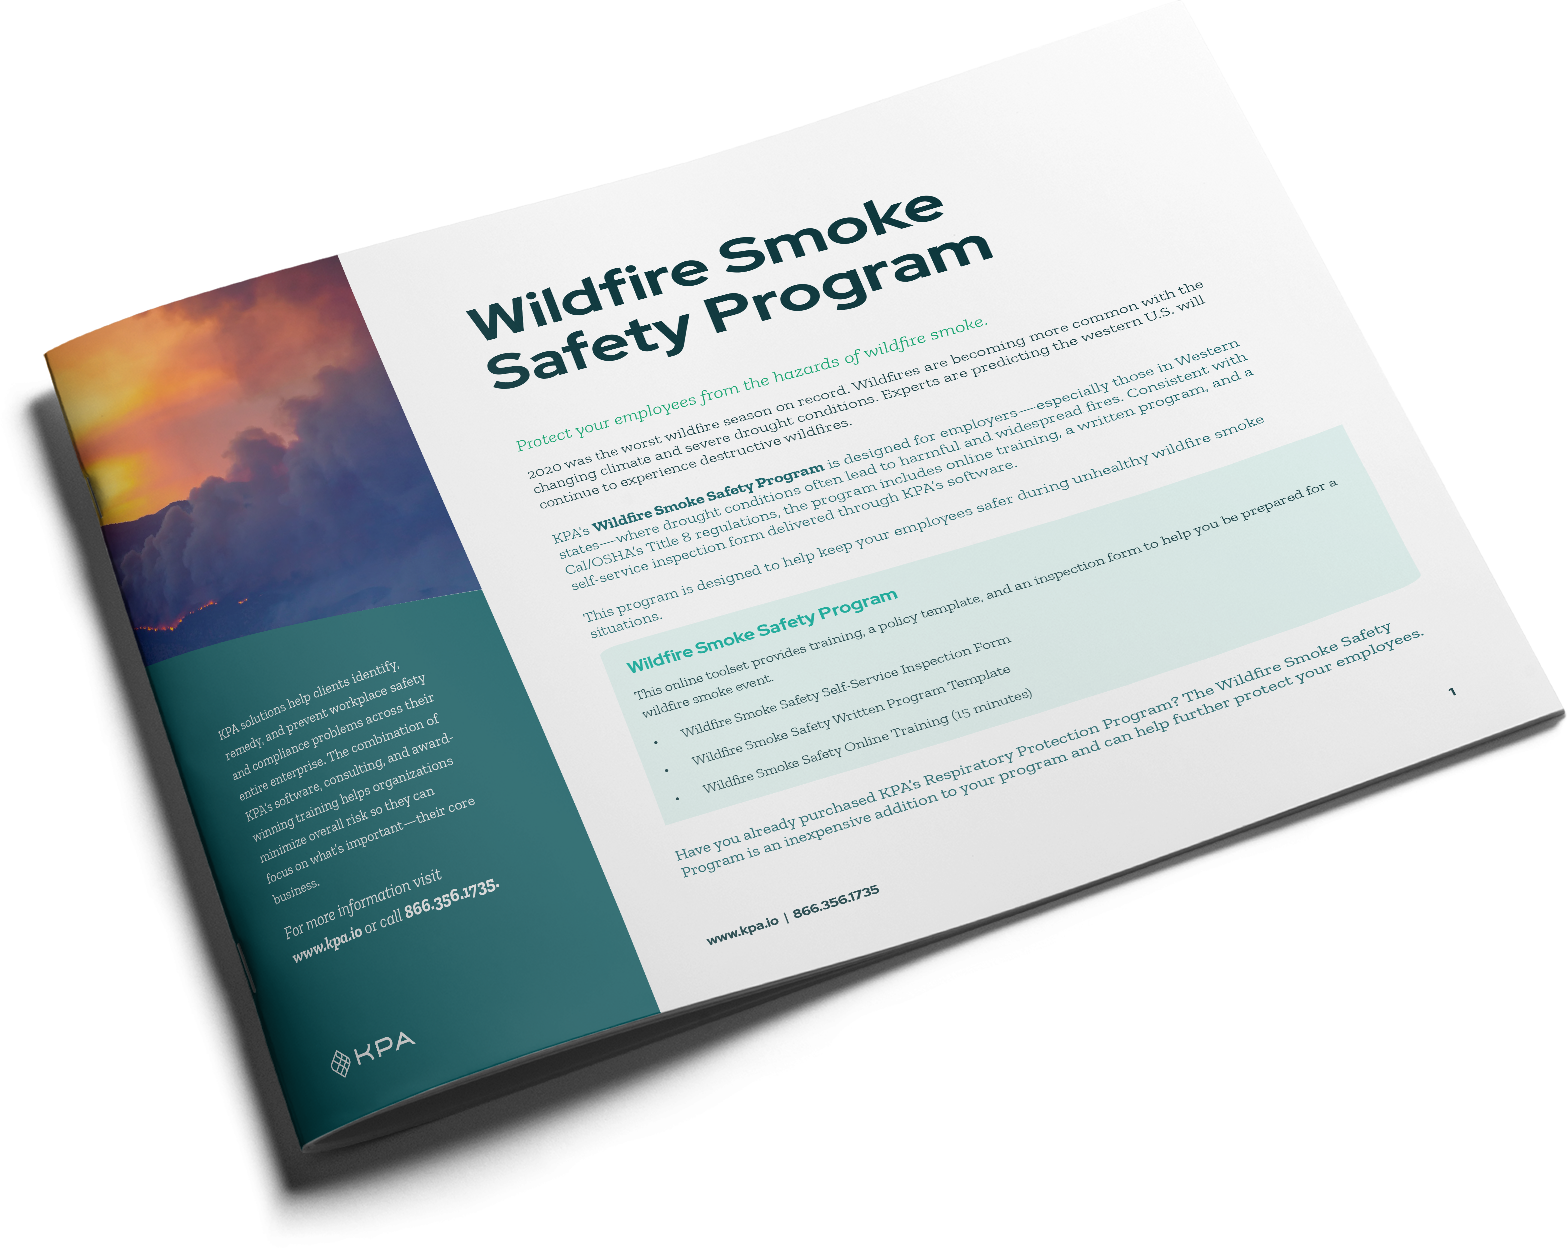 Wildfire Smoke Safety Program - Thumbnail